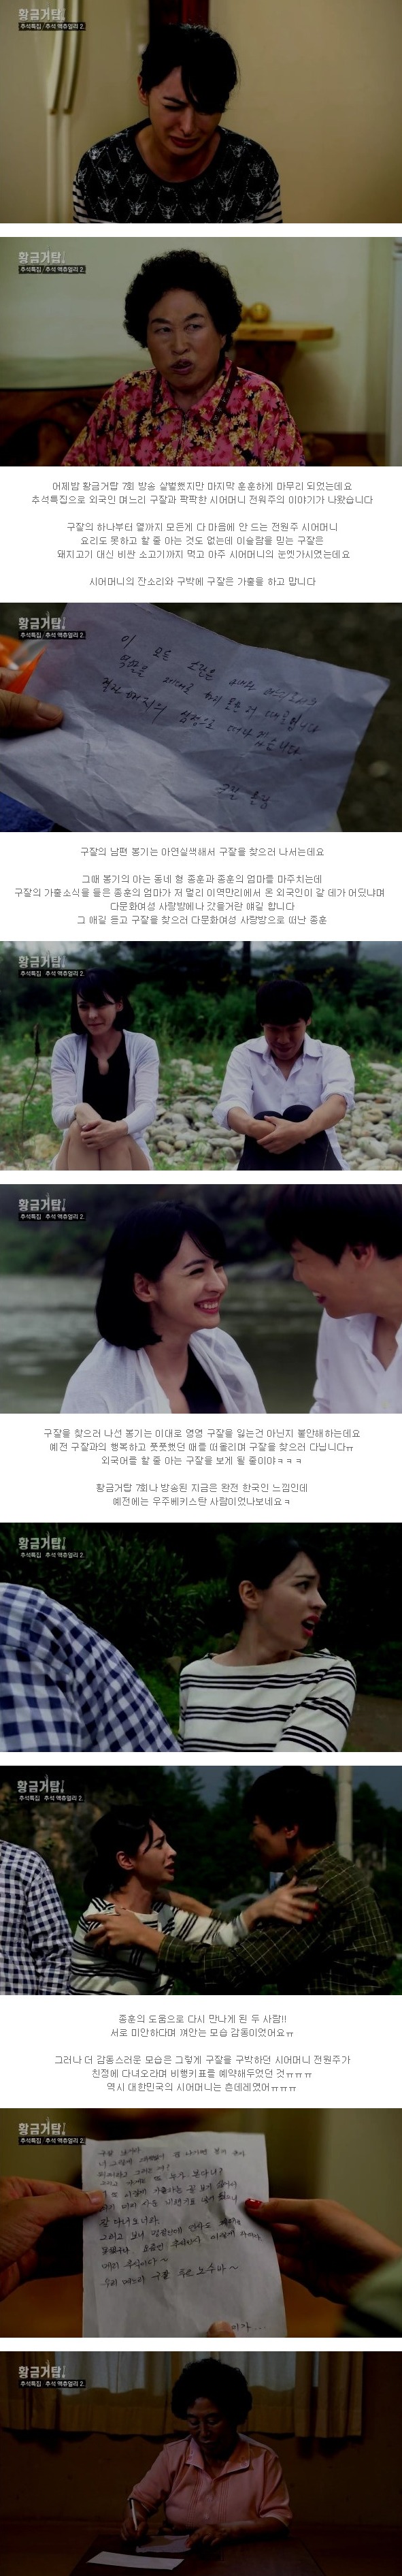 episode 7 captures for the Korean drama 'Golden Tower'